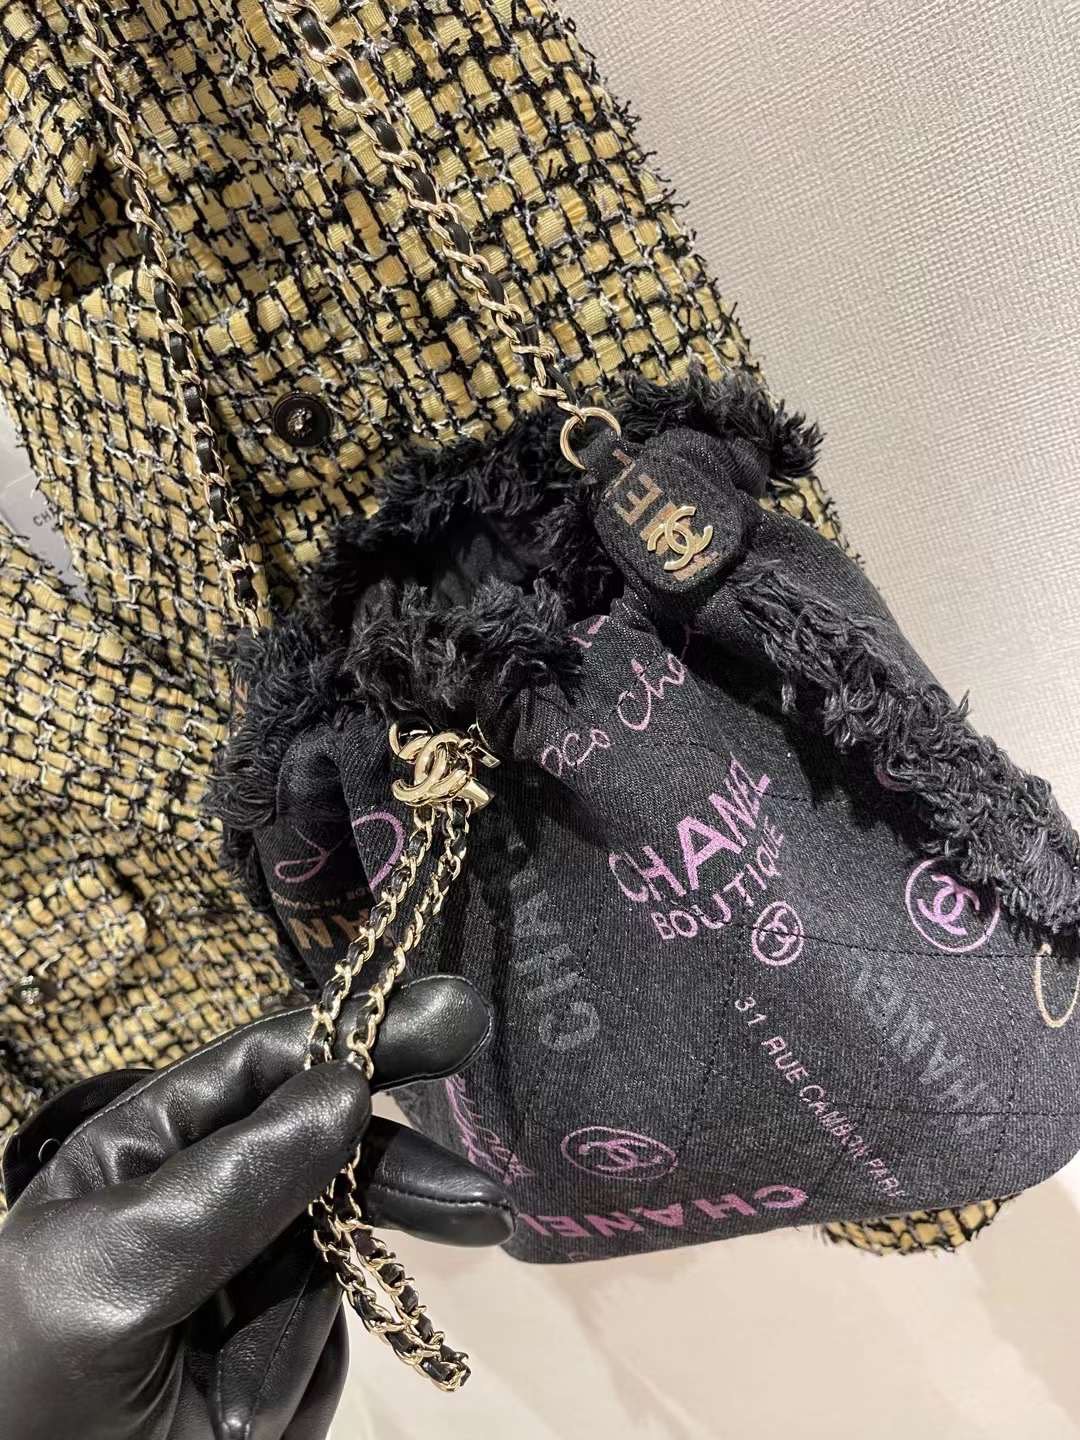 【P1170】香奈儿包包官网 Chanel2022年新款黑色涂鸦牛仔抽绳水桶包